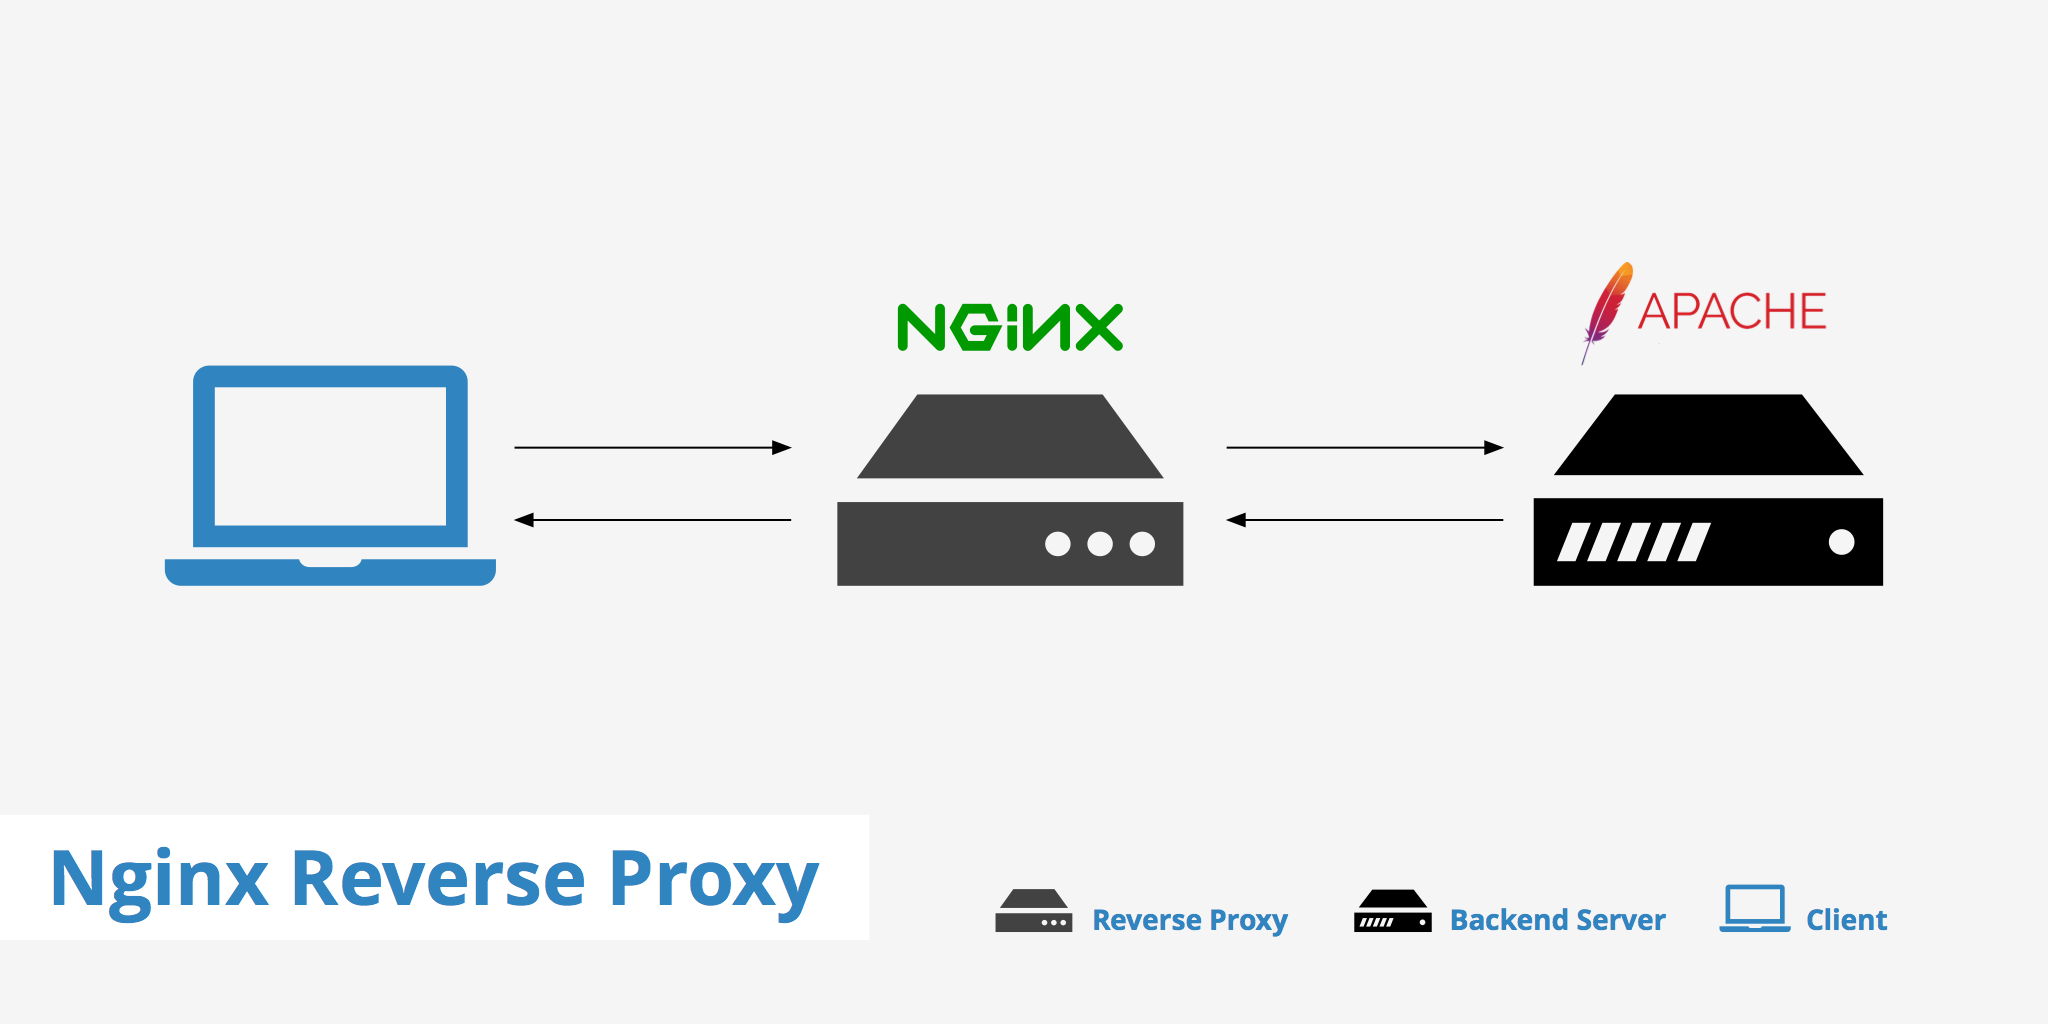 Nginx reverse proxy